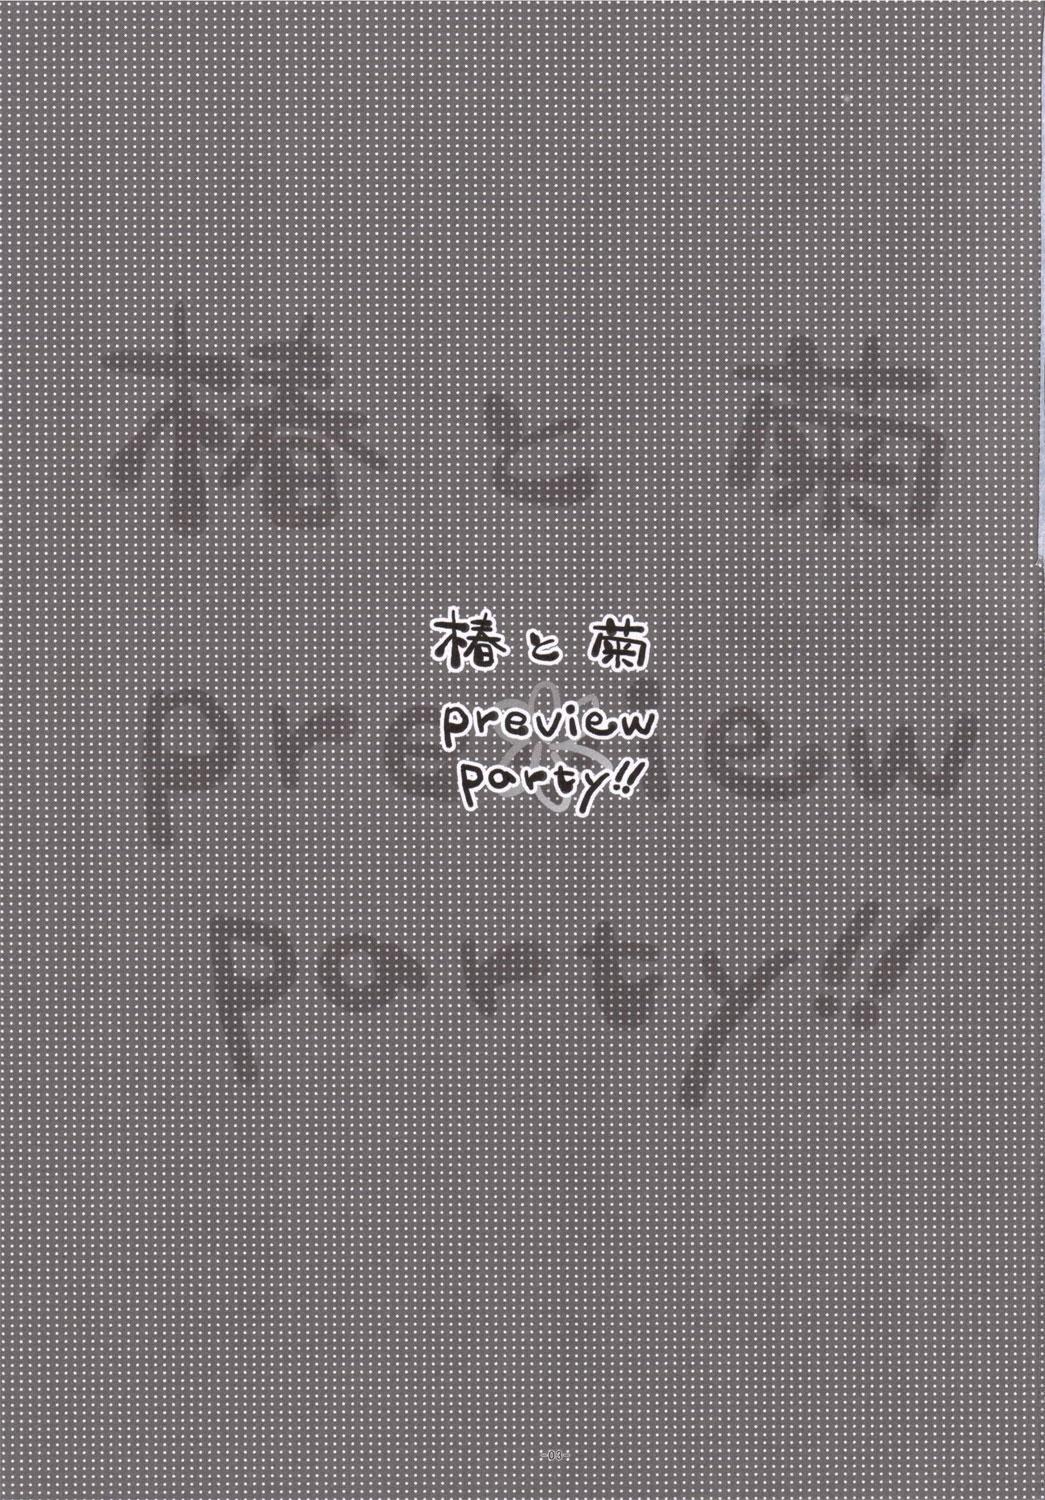 Tsubaki to Kiku 1.5 Preview Party!! 1